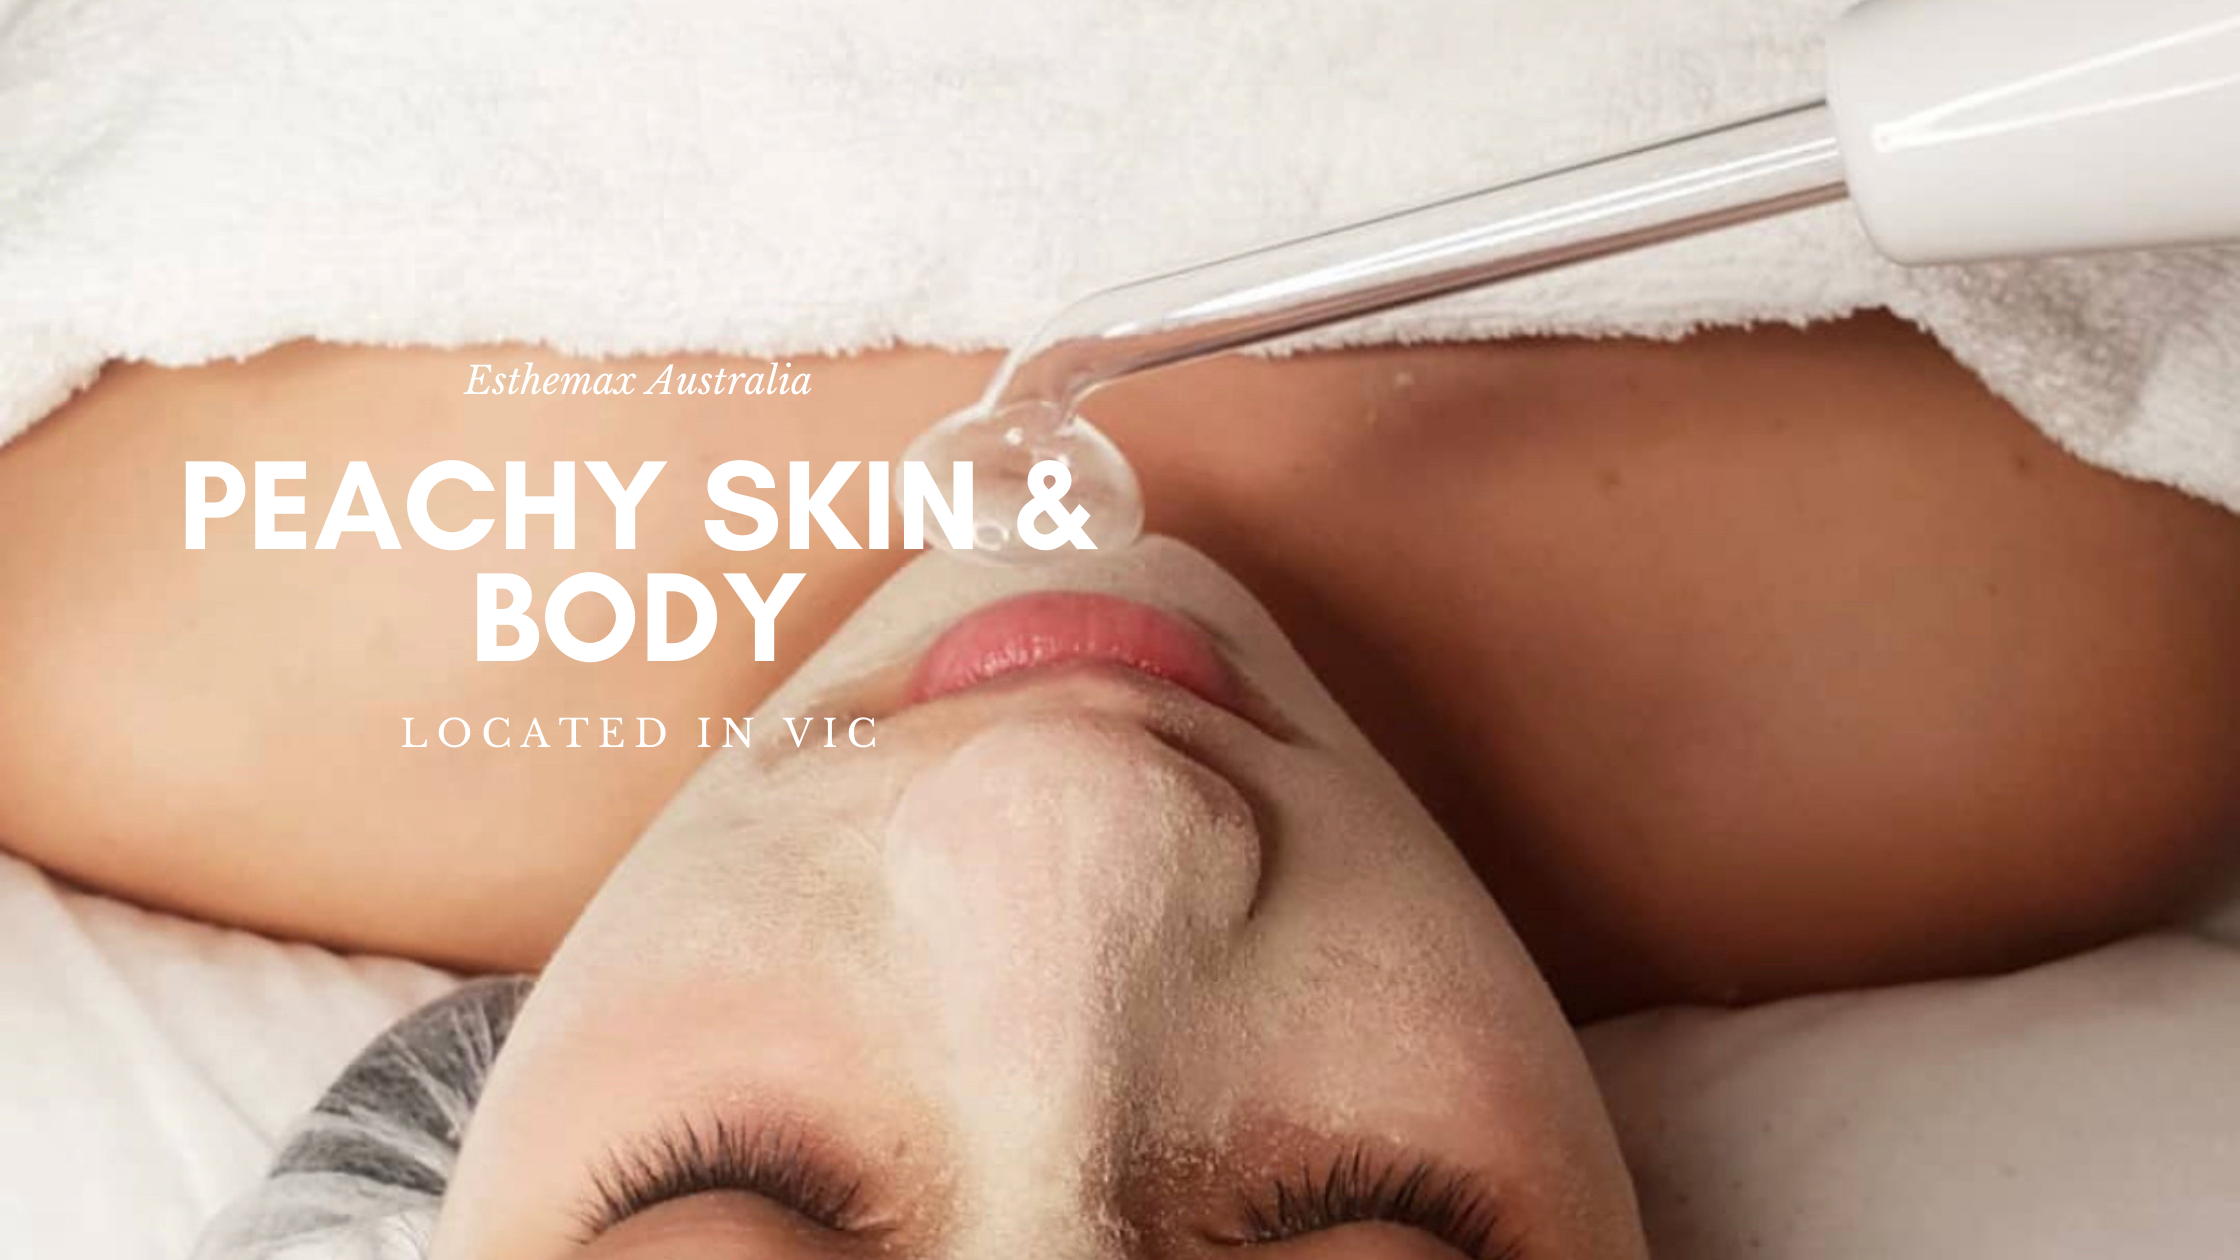 Australian Beauty Salon Feature: Peachy Skin & Body Melbourne, VIC